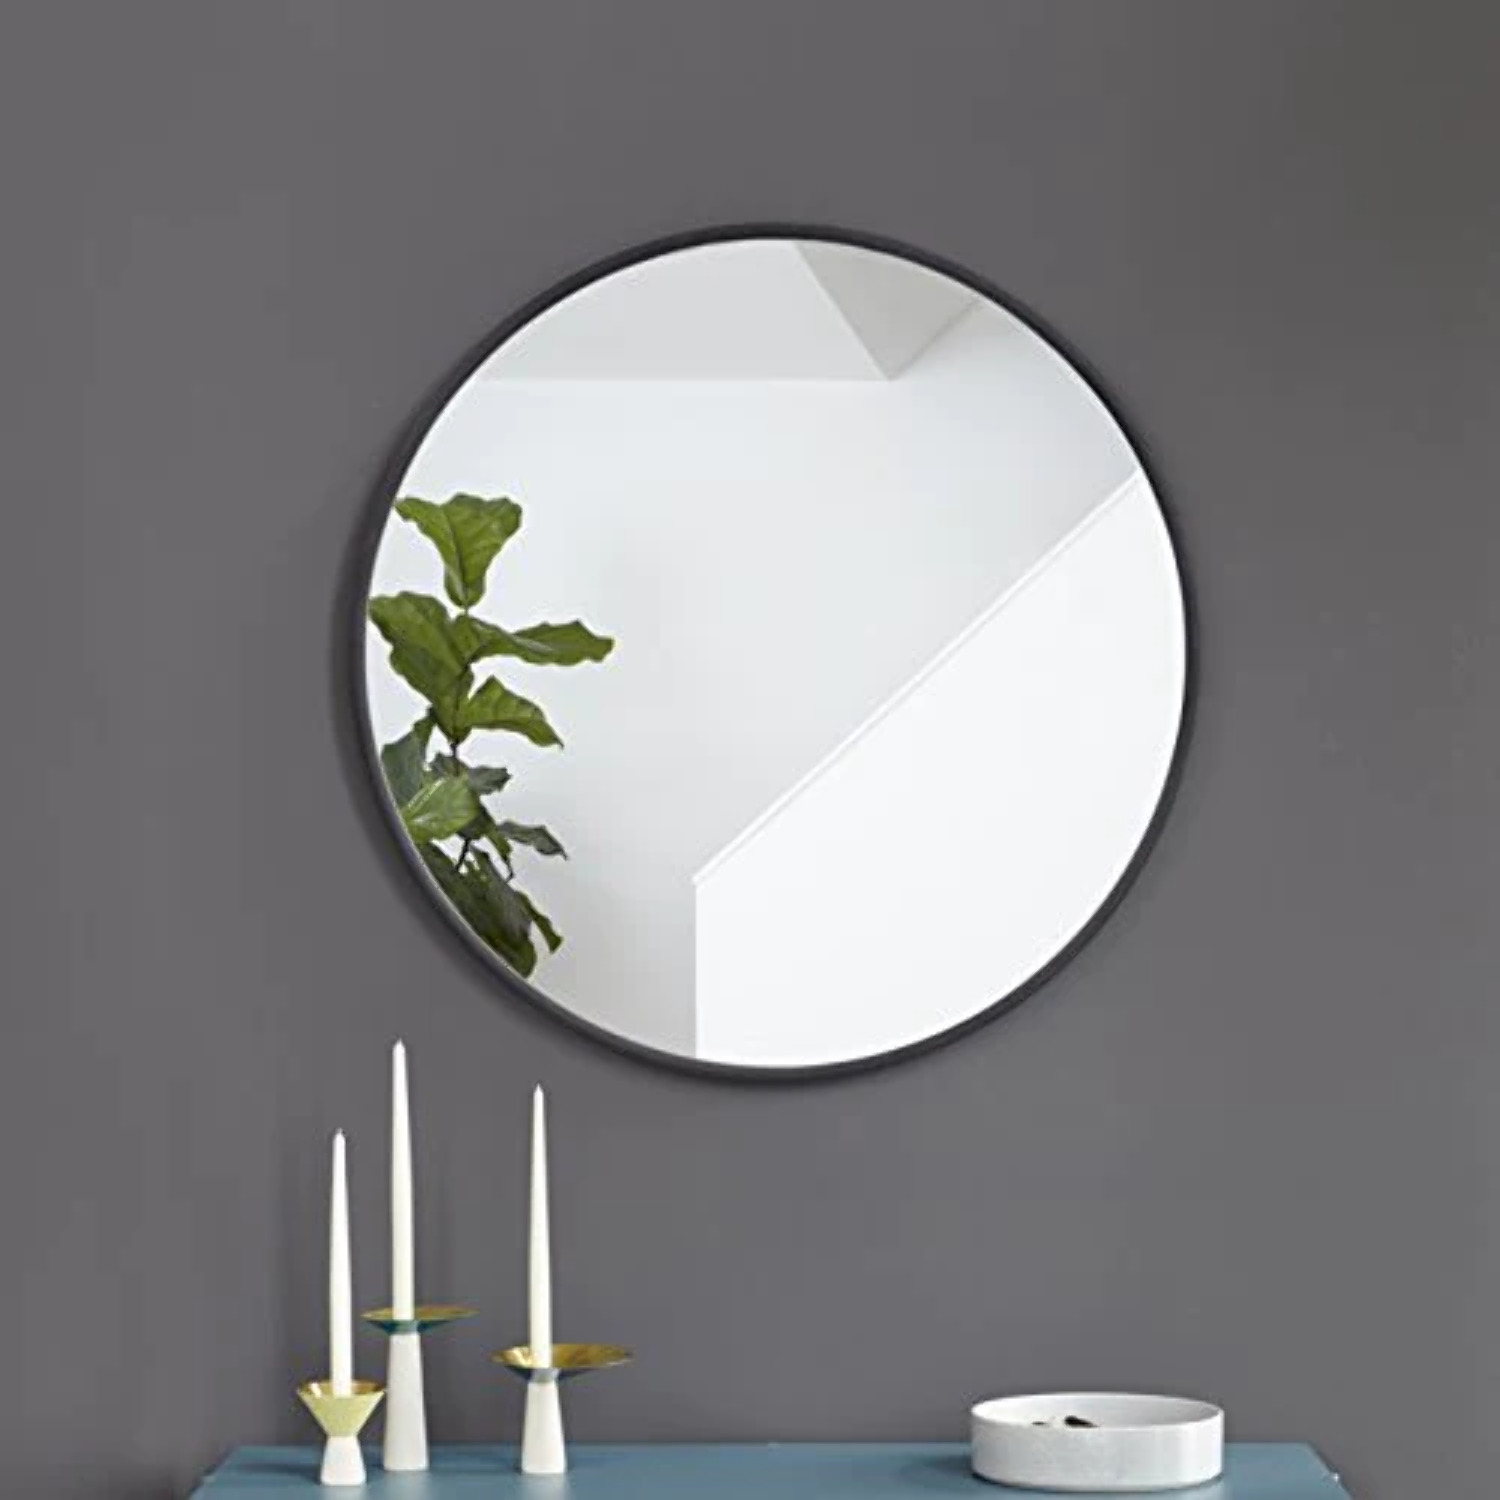 Umbra Hub 37" Decorative Round Wall Mirror - image 4 of 12